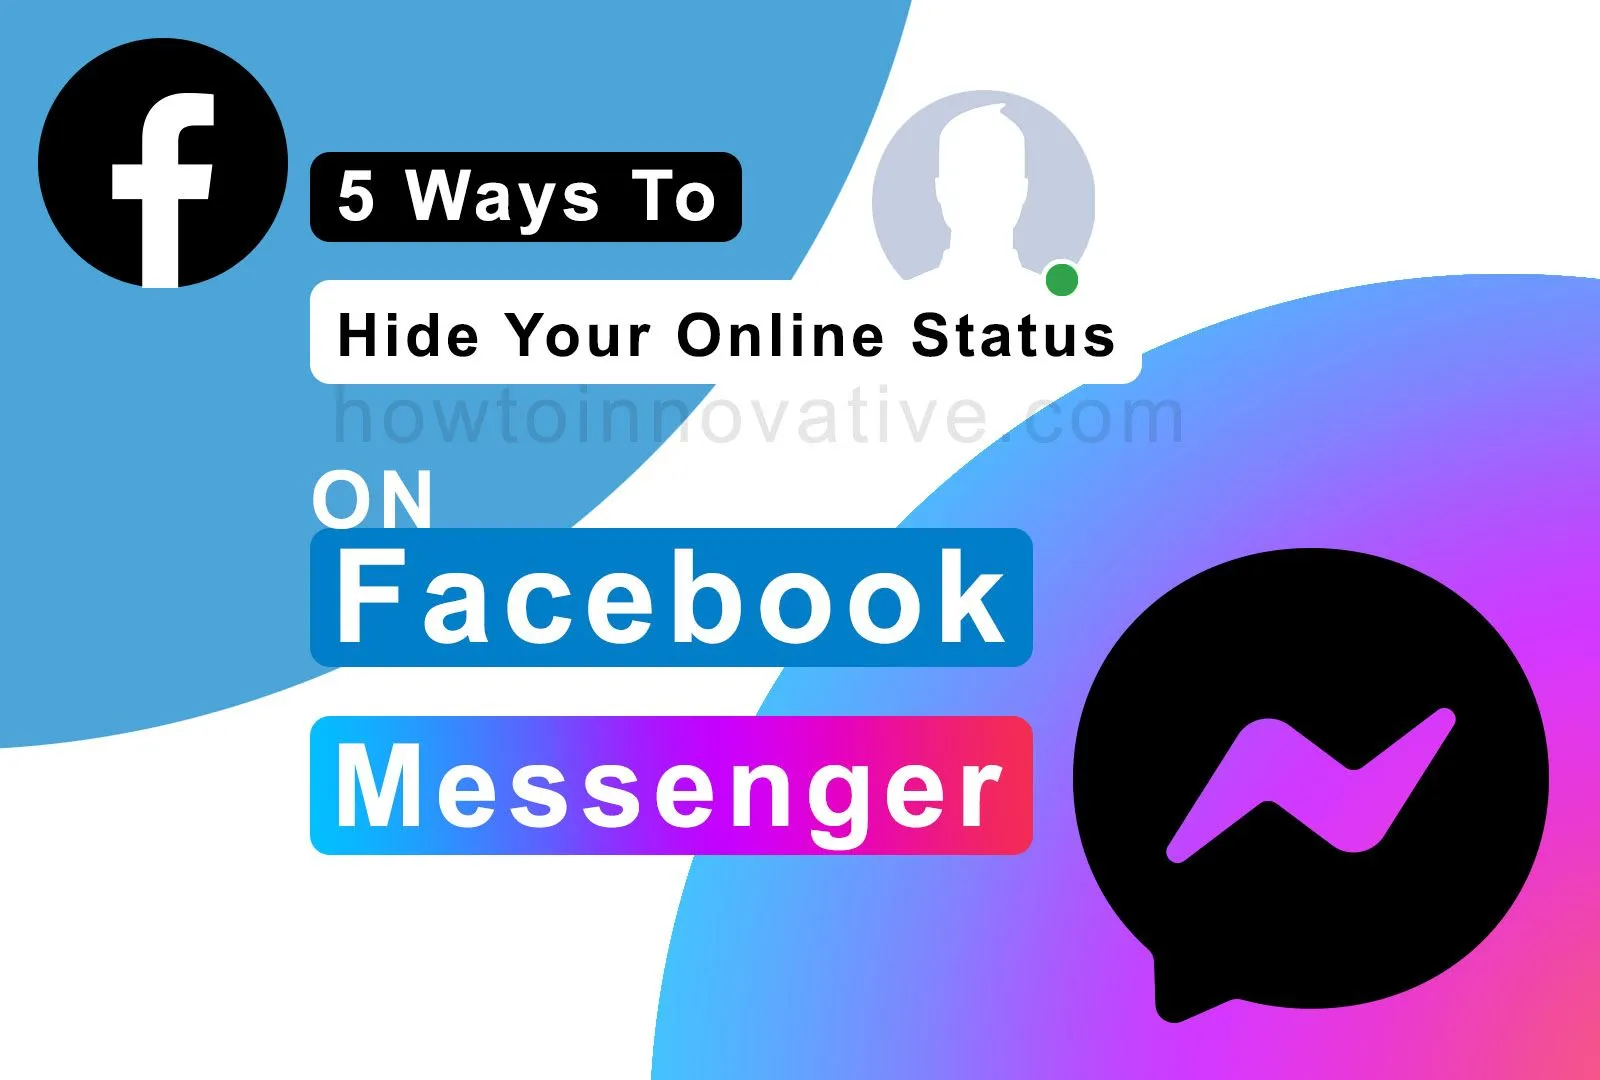 Hide Your Online Status on Facebook Messenger